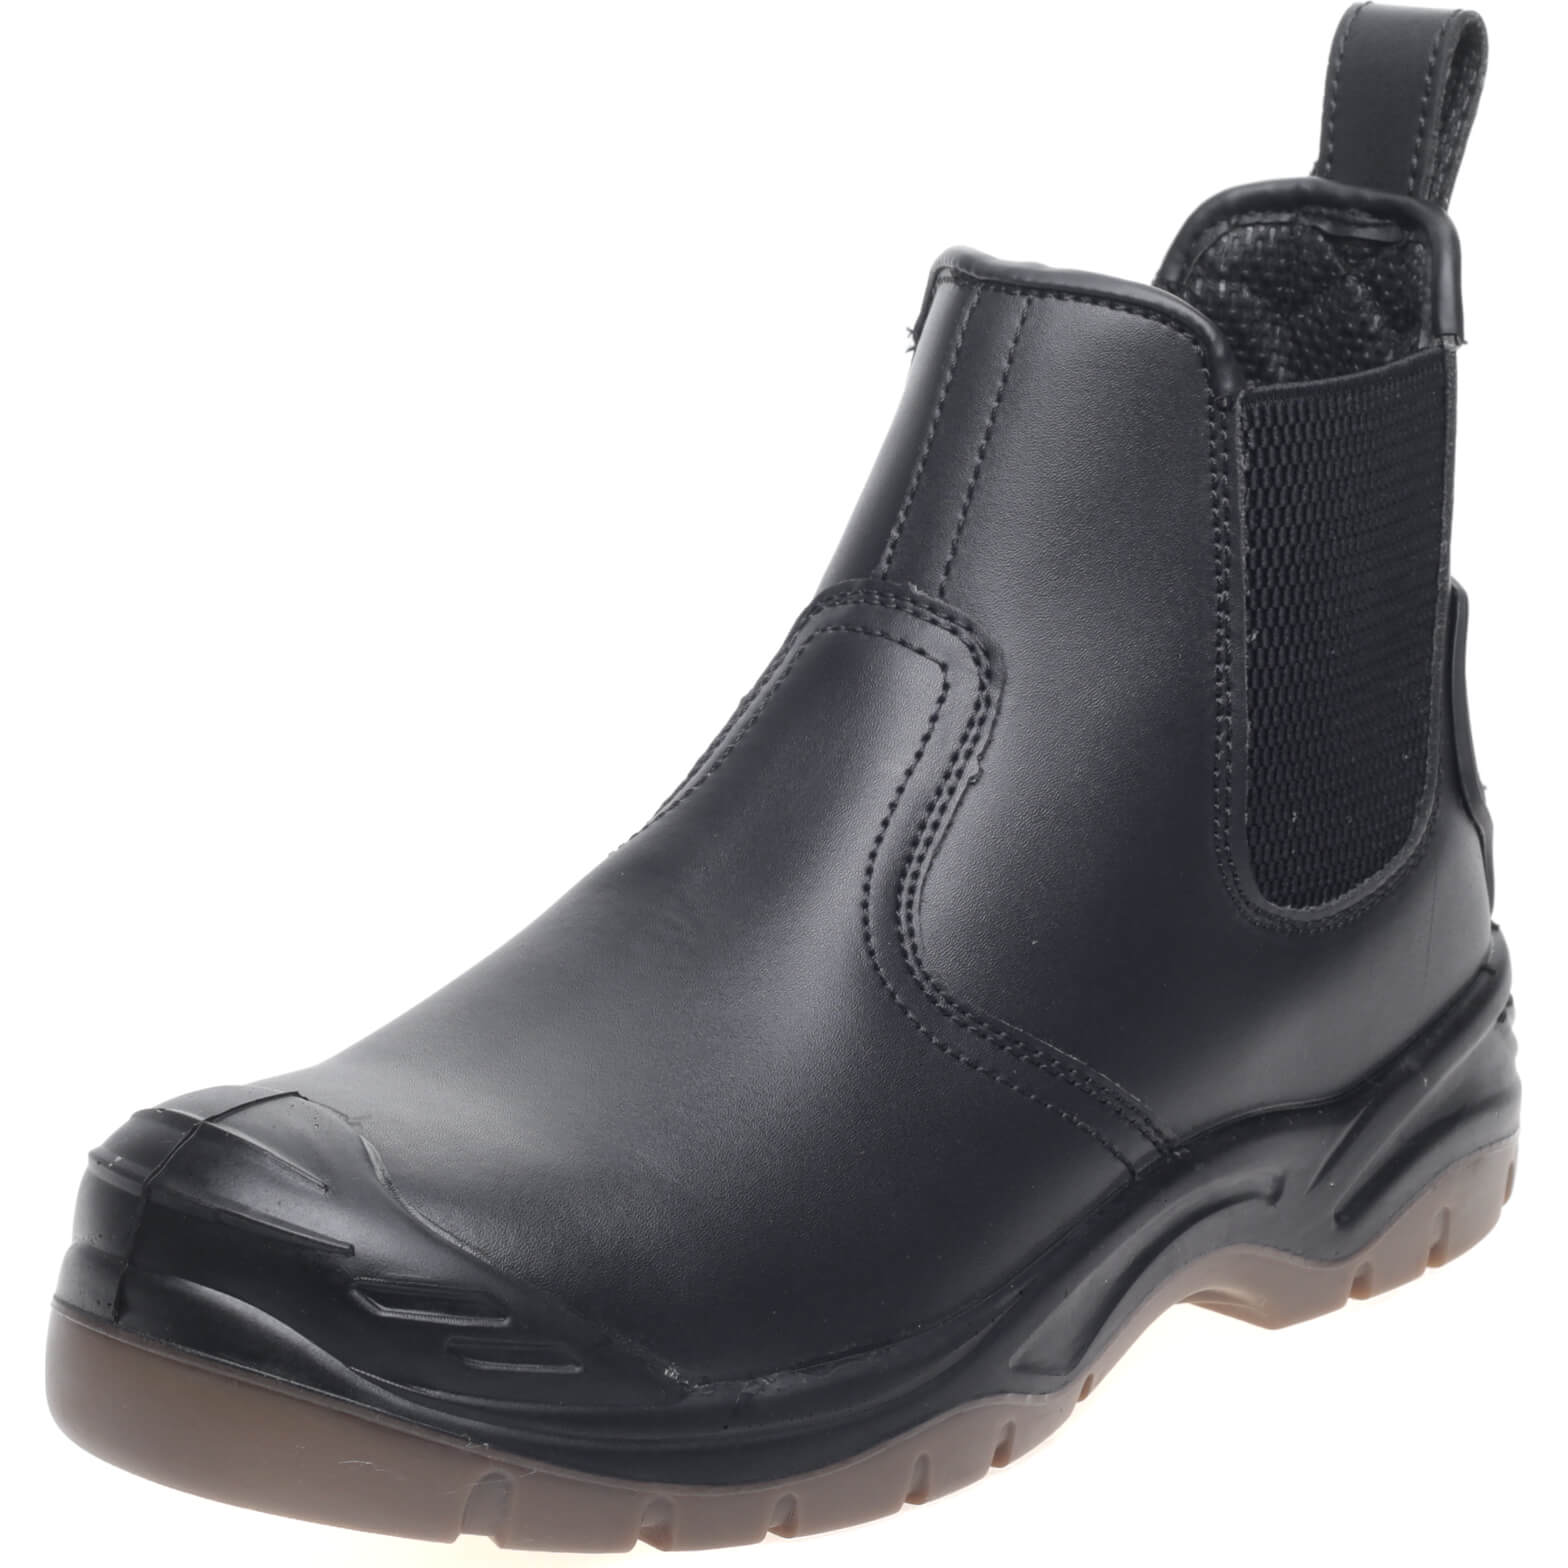 Image of Apache AP71 Safety Dealer Boots Black Size 11